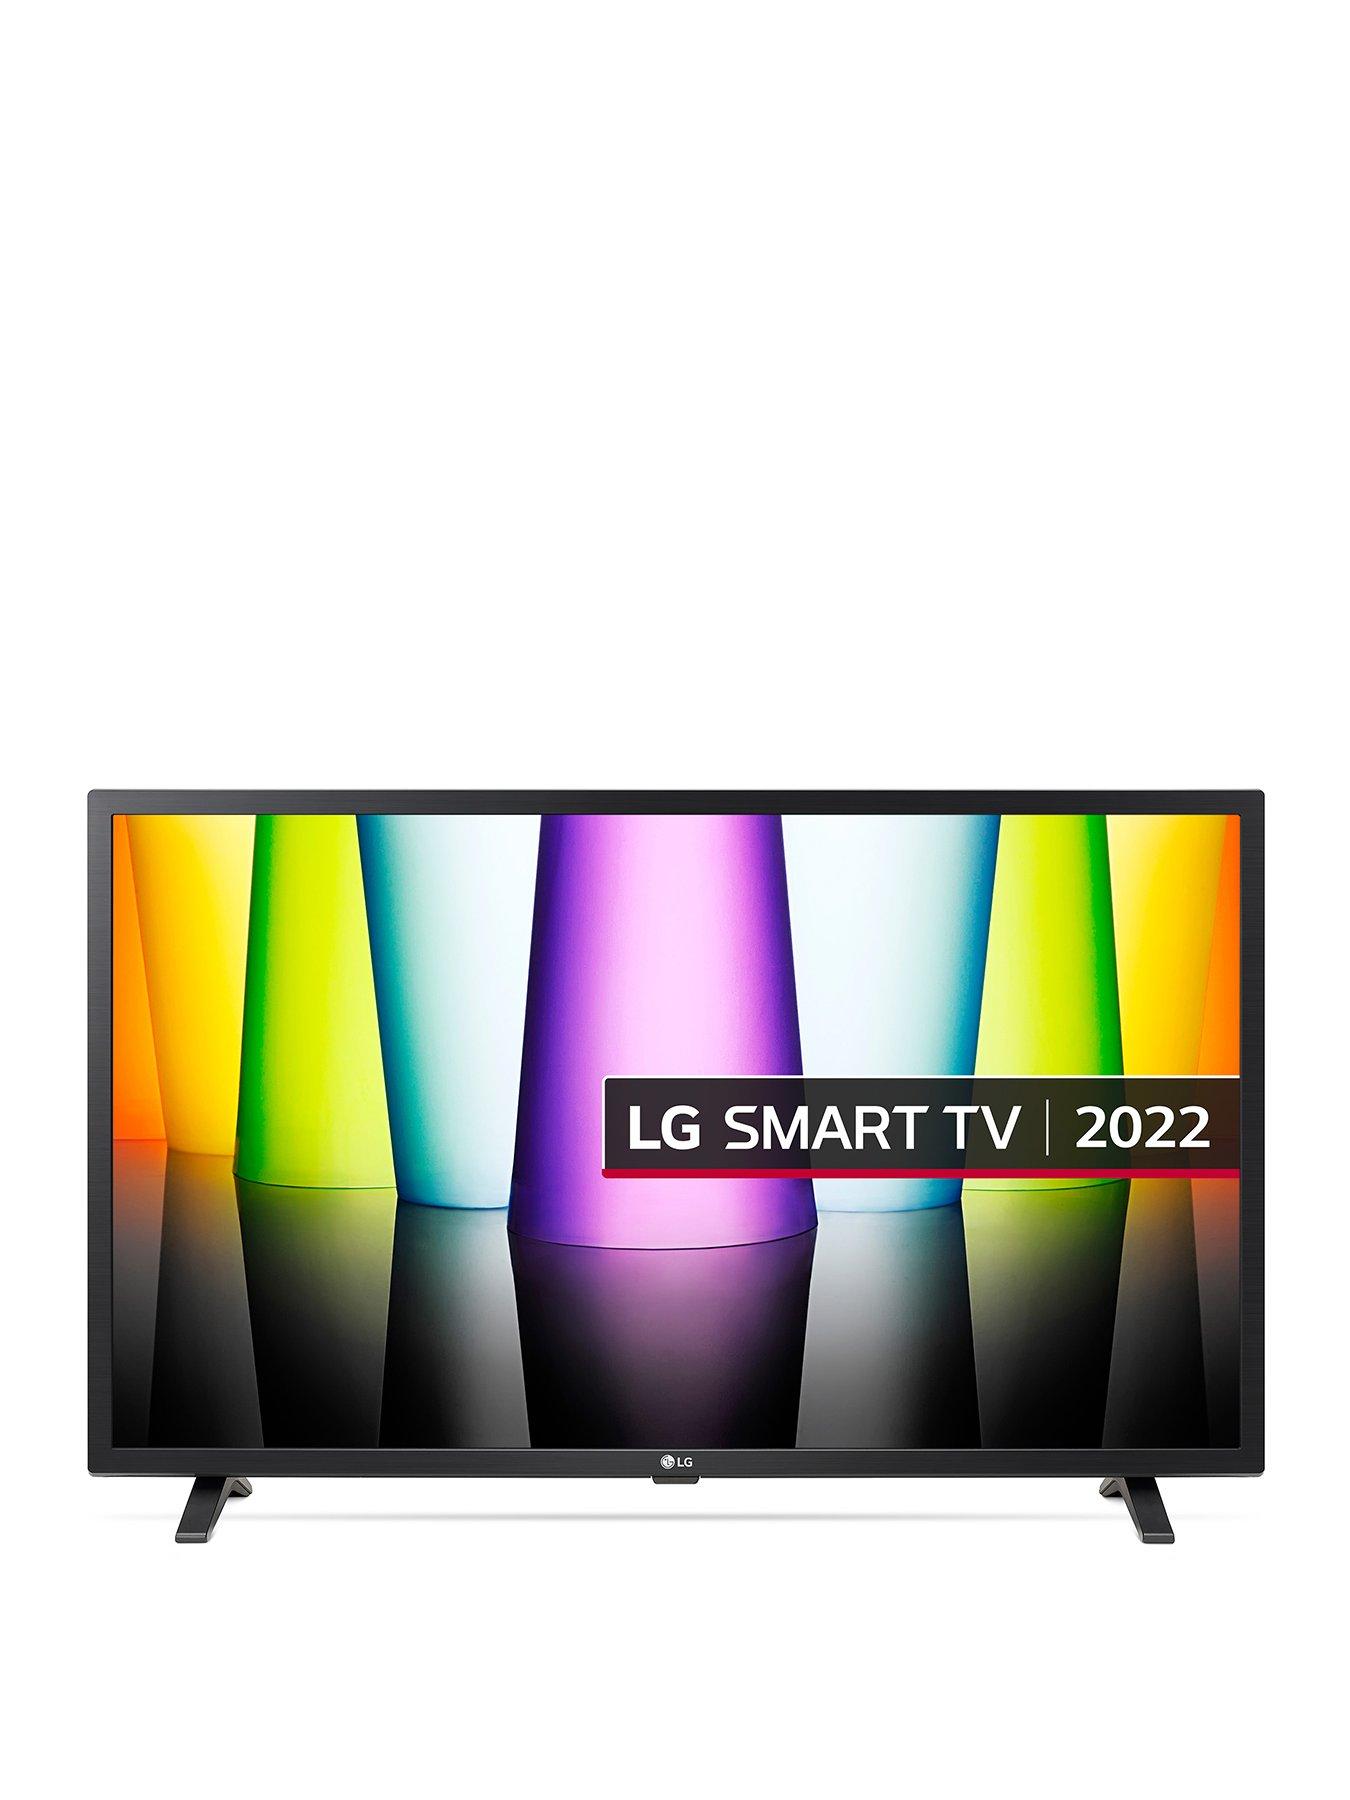 Philips 32 Full HD HDR LED Smart TV, 32PFS6908/05